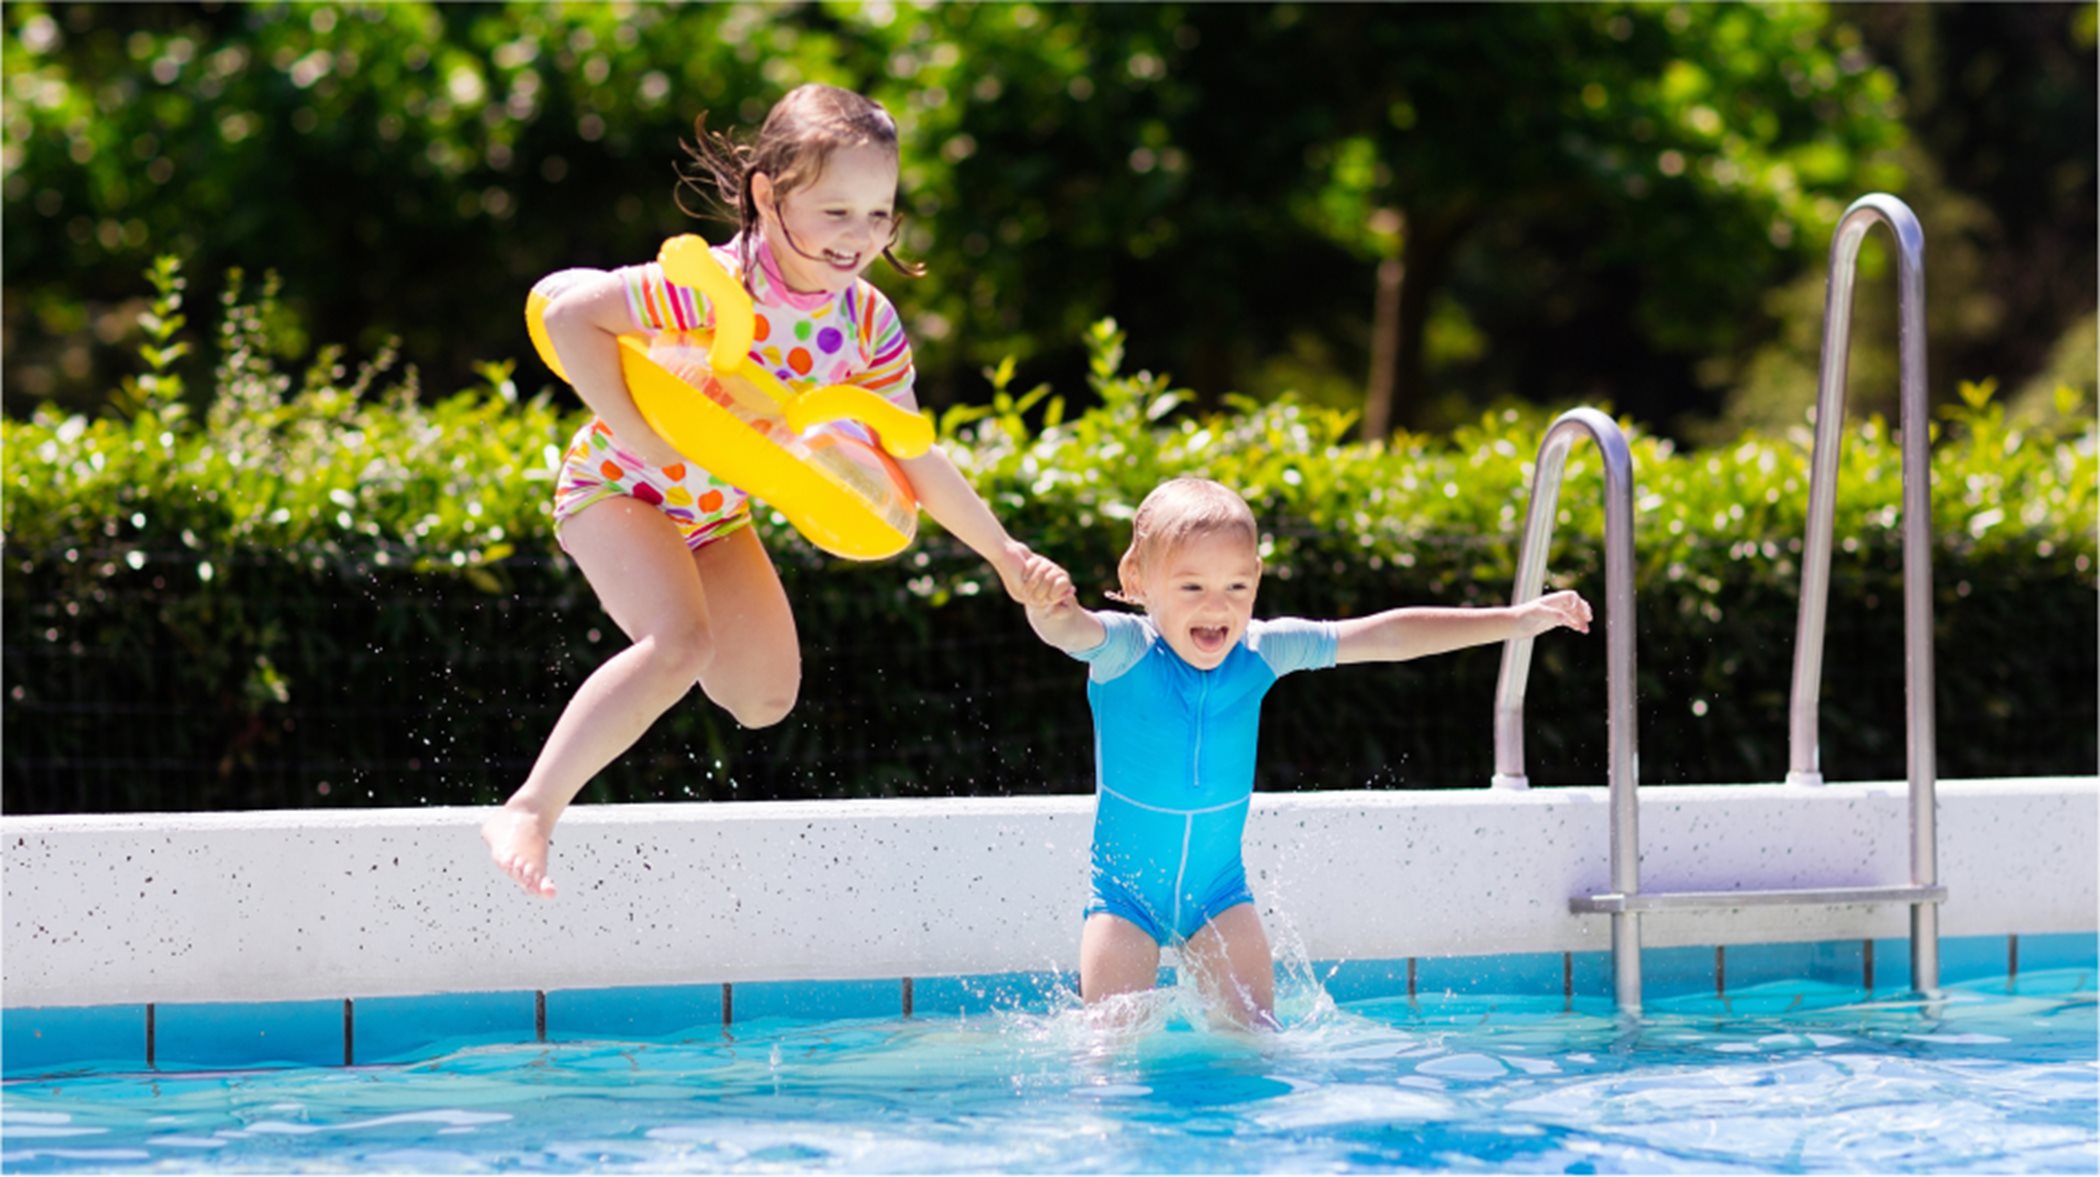 Kids jumping in swimming pool